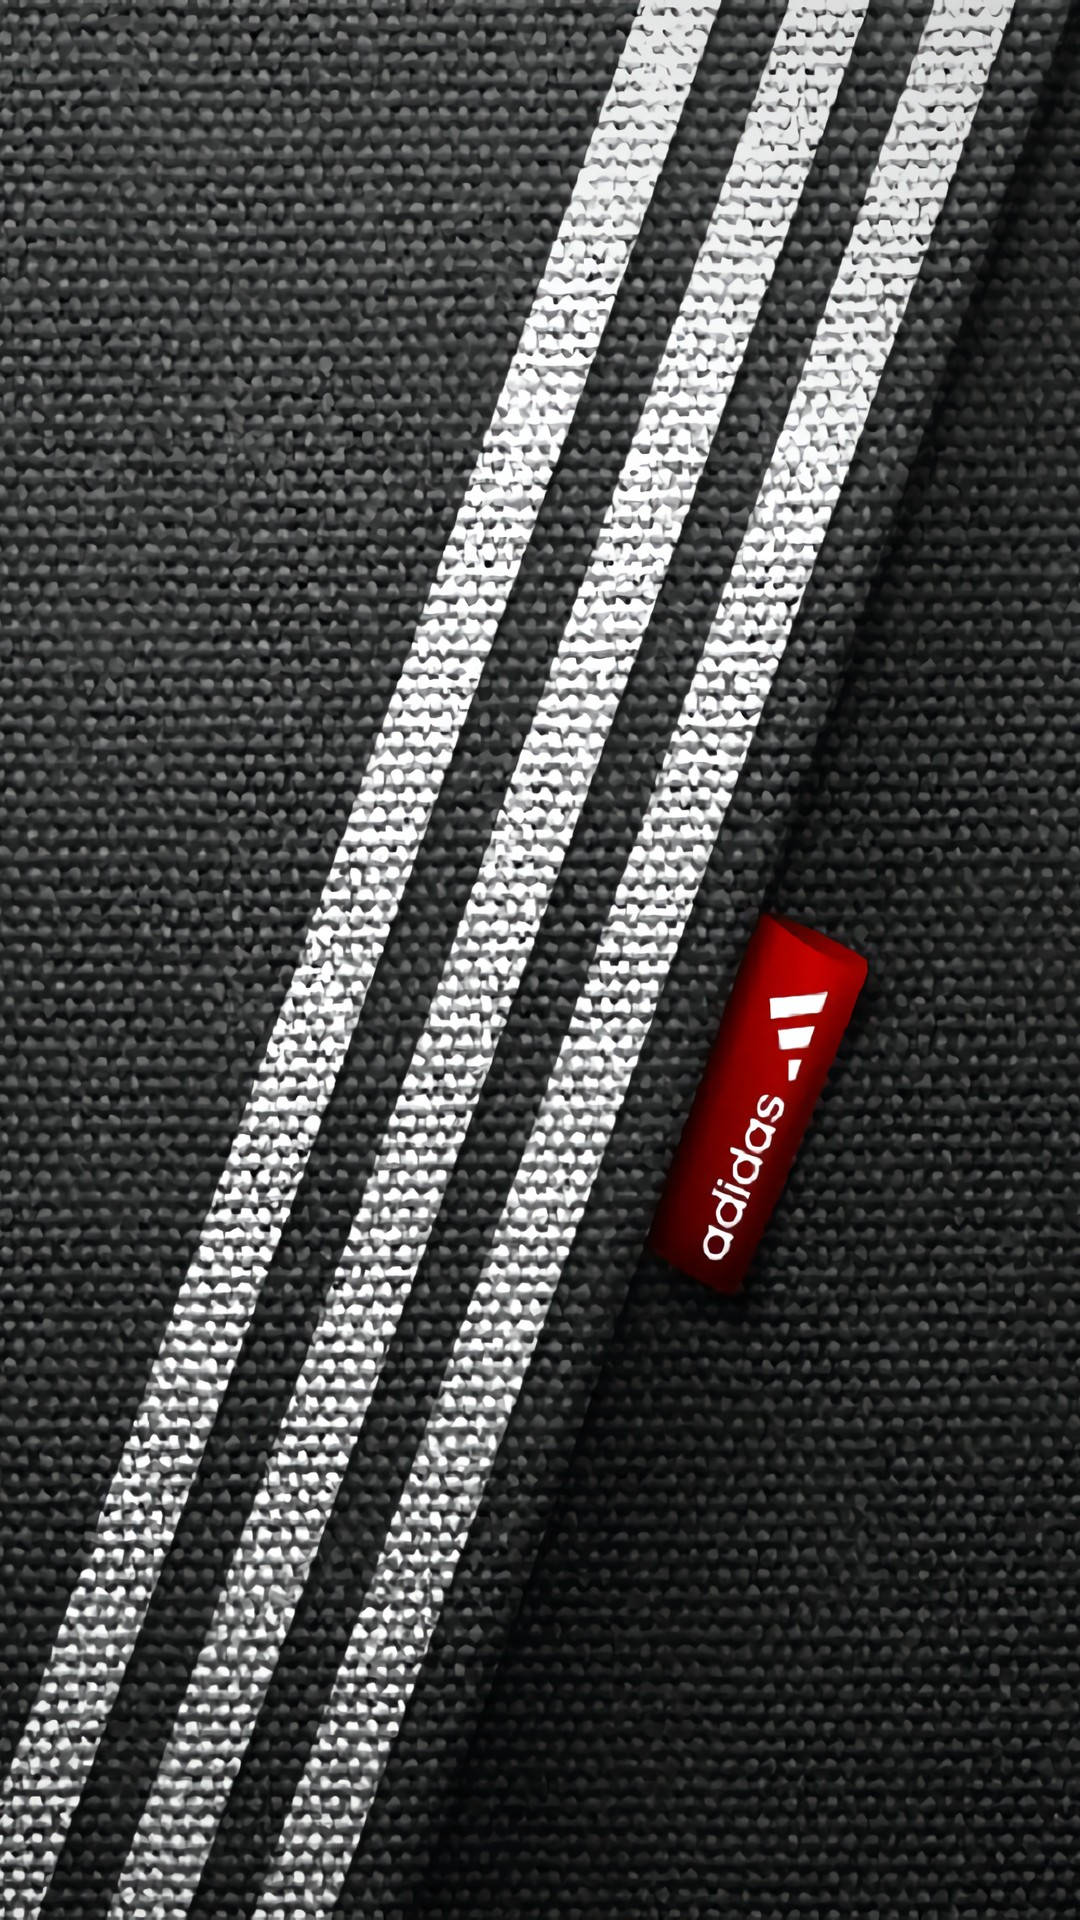 Adidas Wallpaper - NawPic